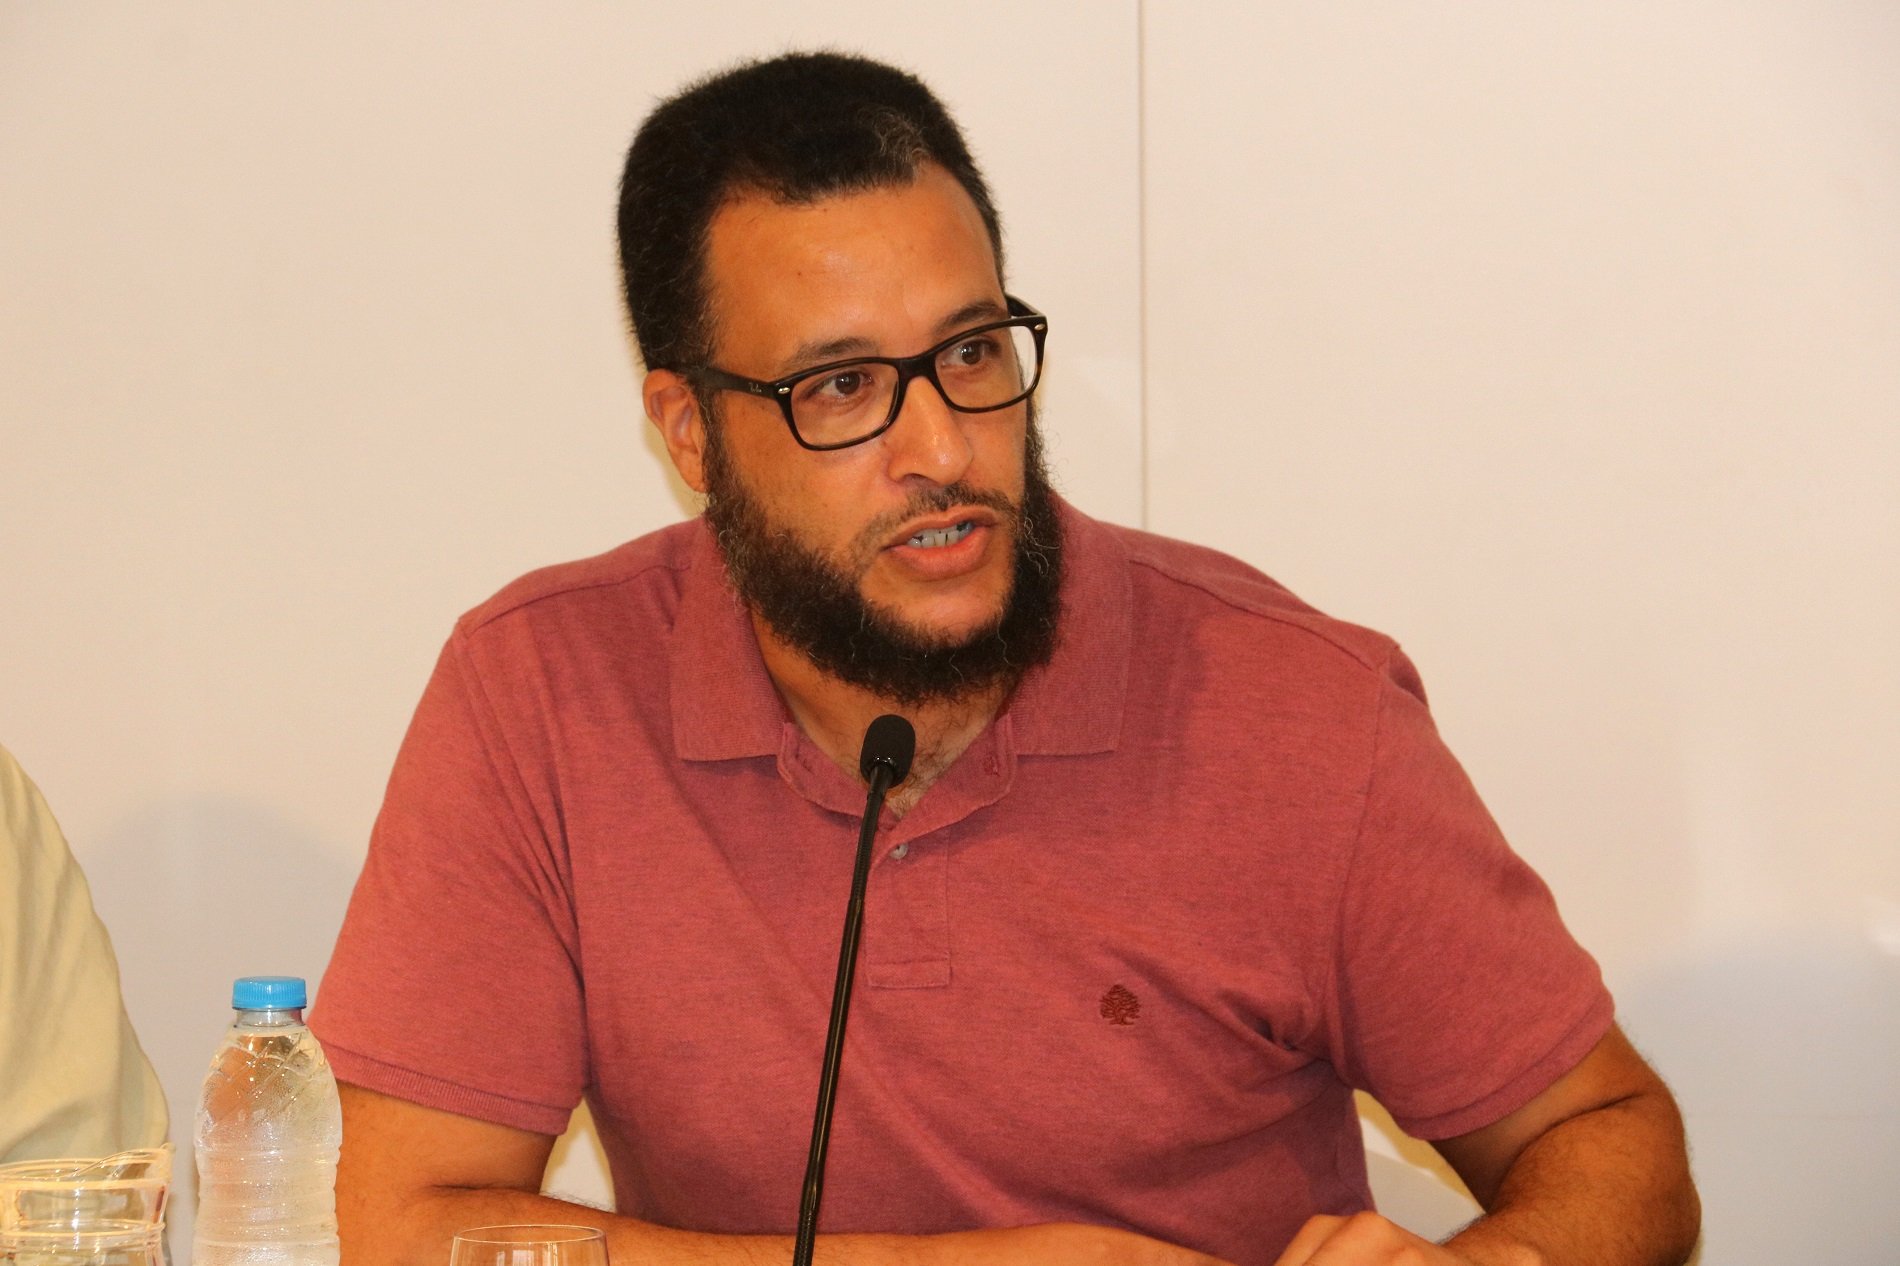 El Parlament apoya a Mohamed Said Badaoui y denuncia represión e islamofobia